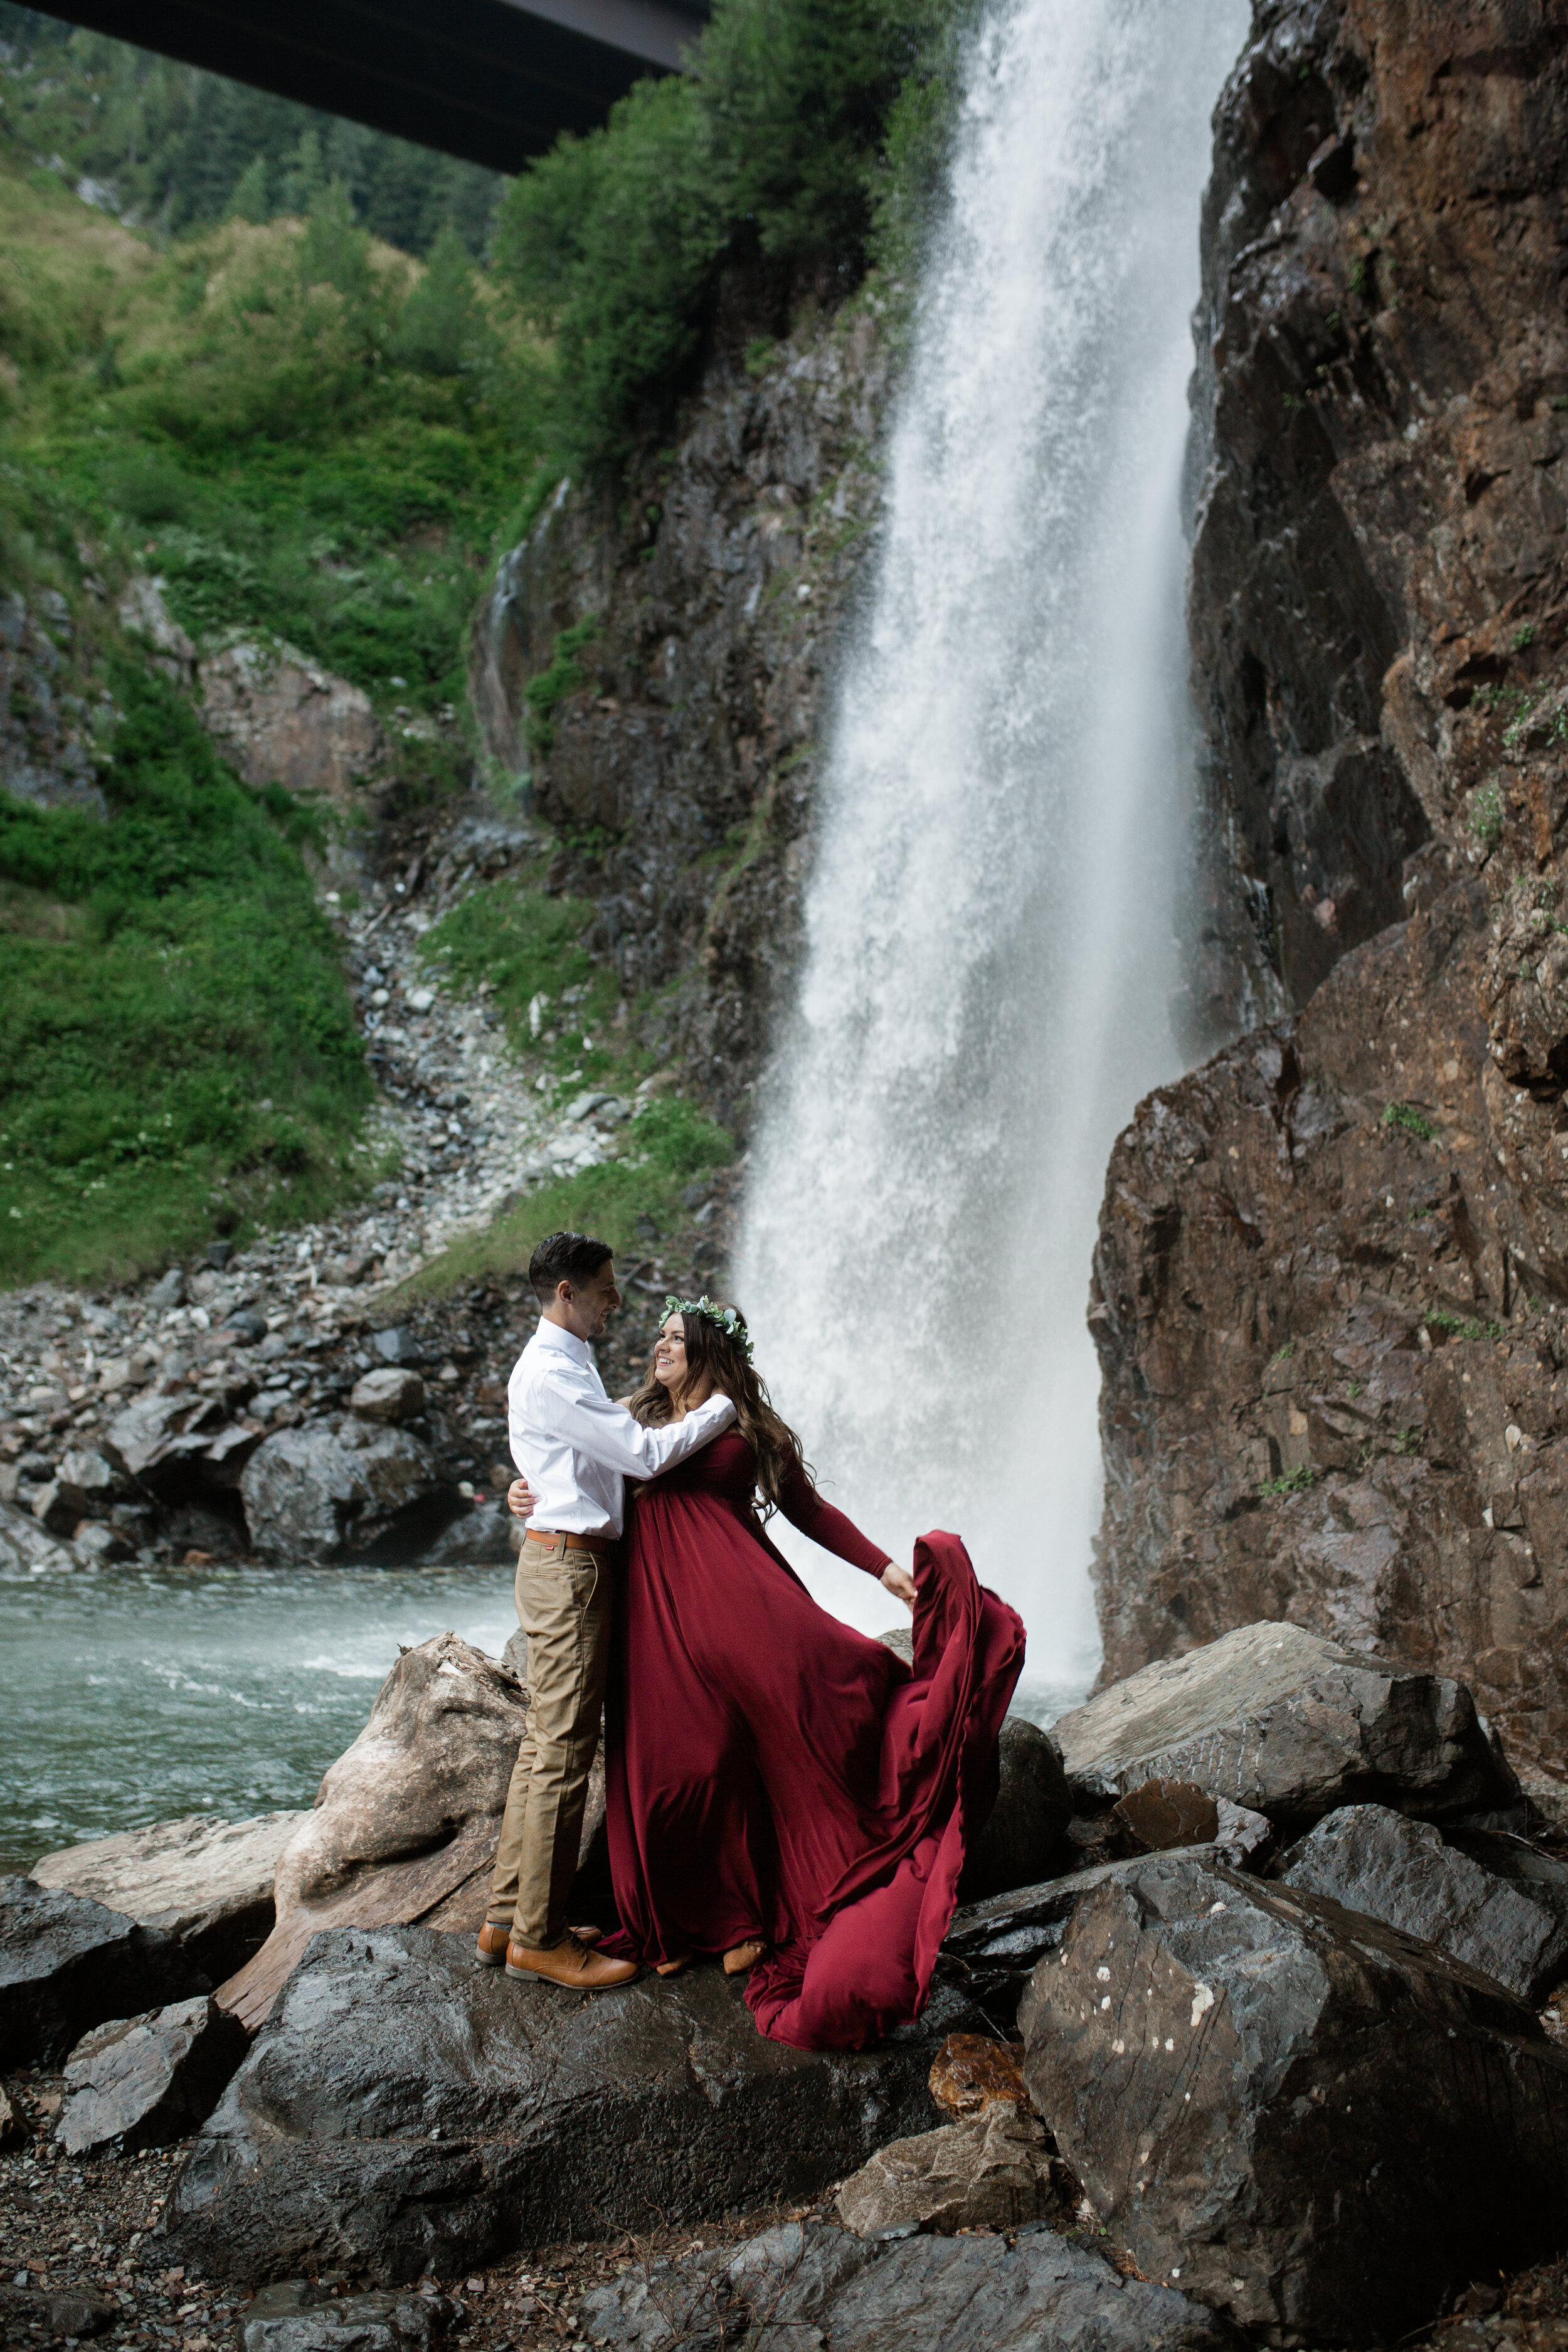 nicole-daacke-photography-gold-creek-pond-franklin-falls-waterfall-summer-adventure-engagement-session-elopement-photographer-washington-summer-engagement-photos-snoqualmie-pass-112.jpg